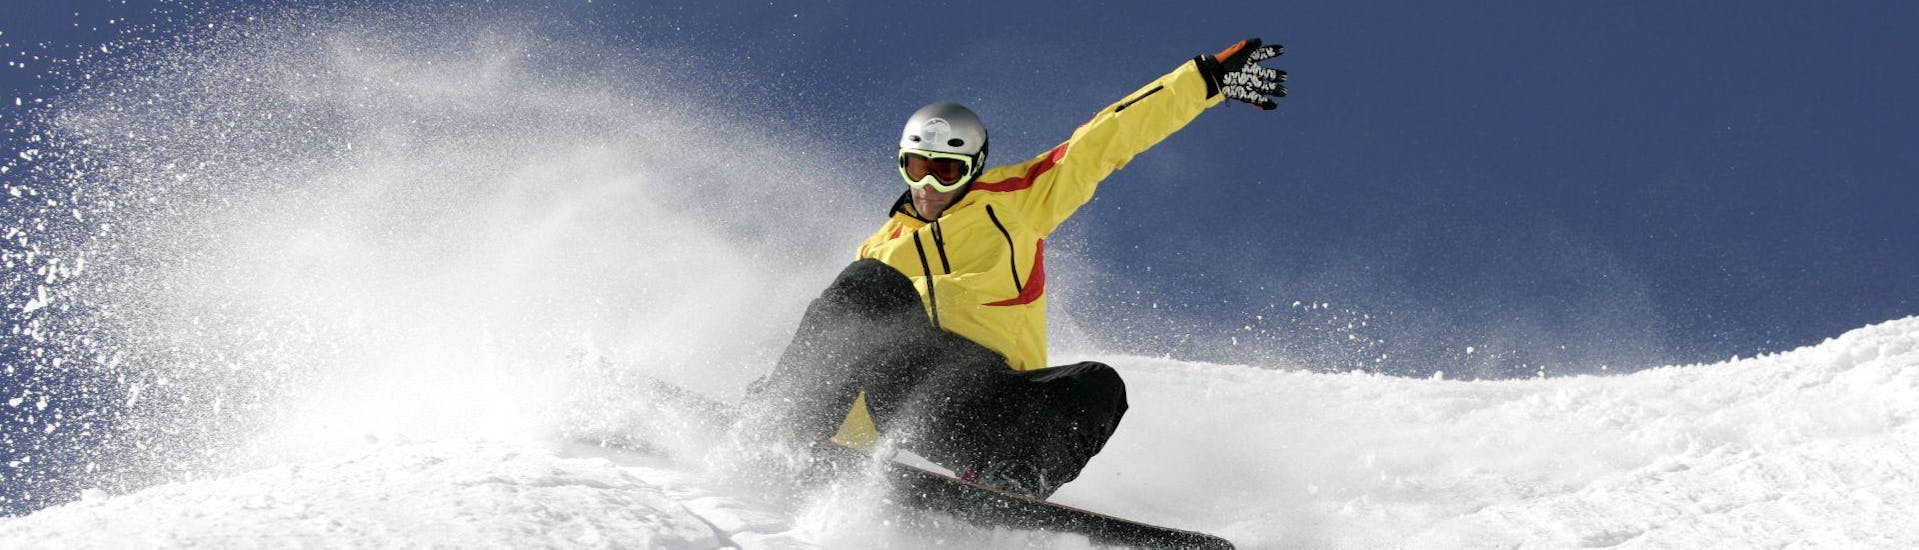 Lezioni di Snowboard a partire da 12 anni per tutti i livelli.